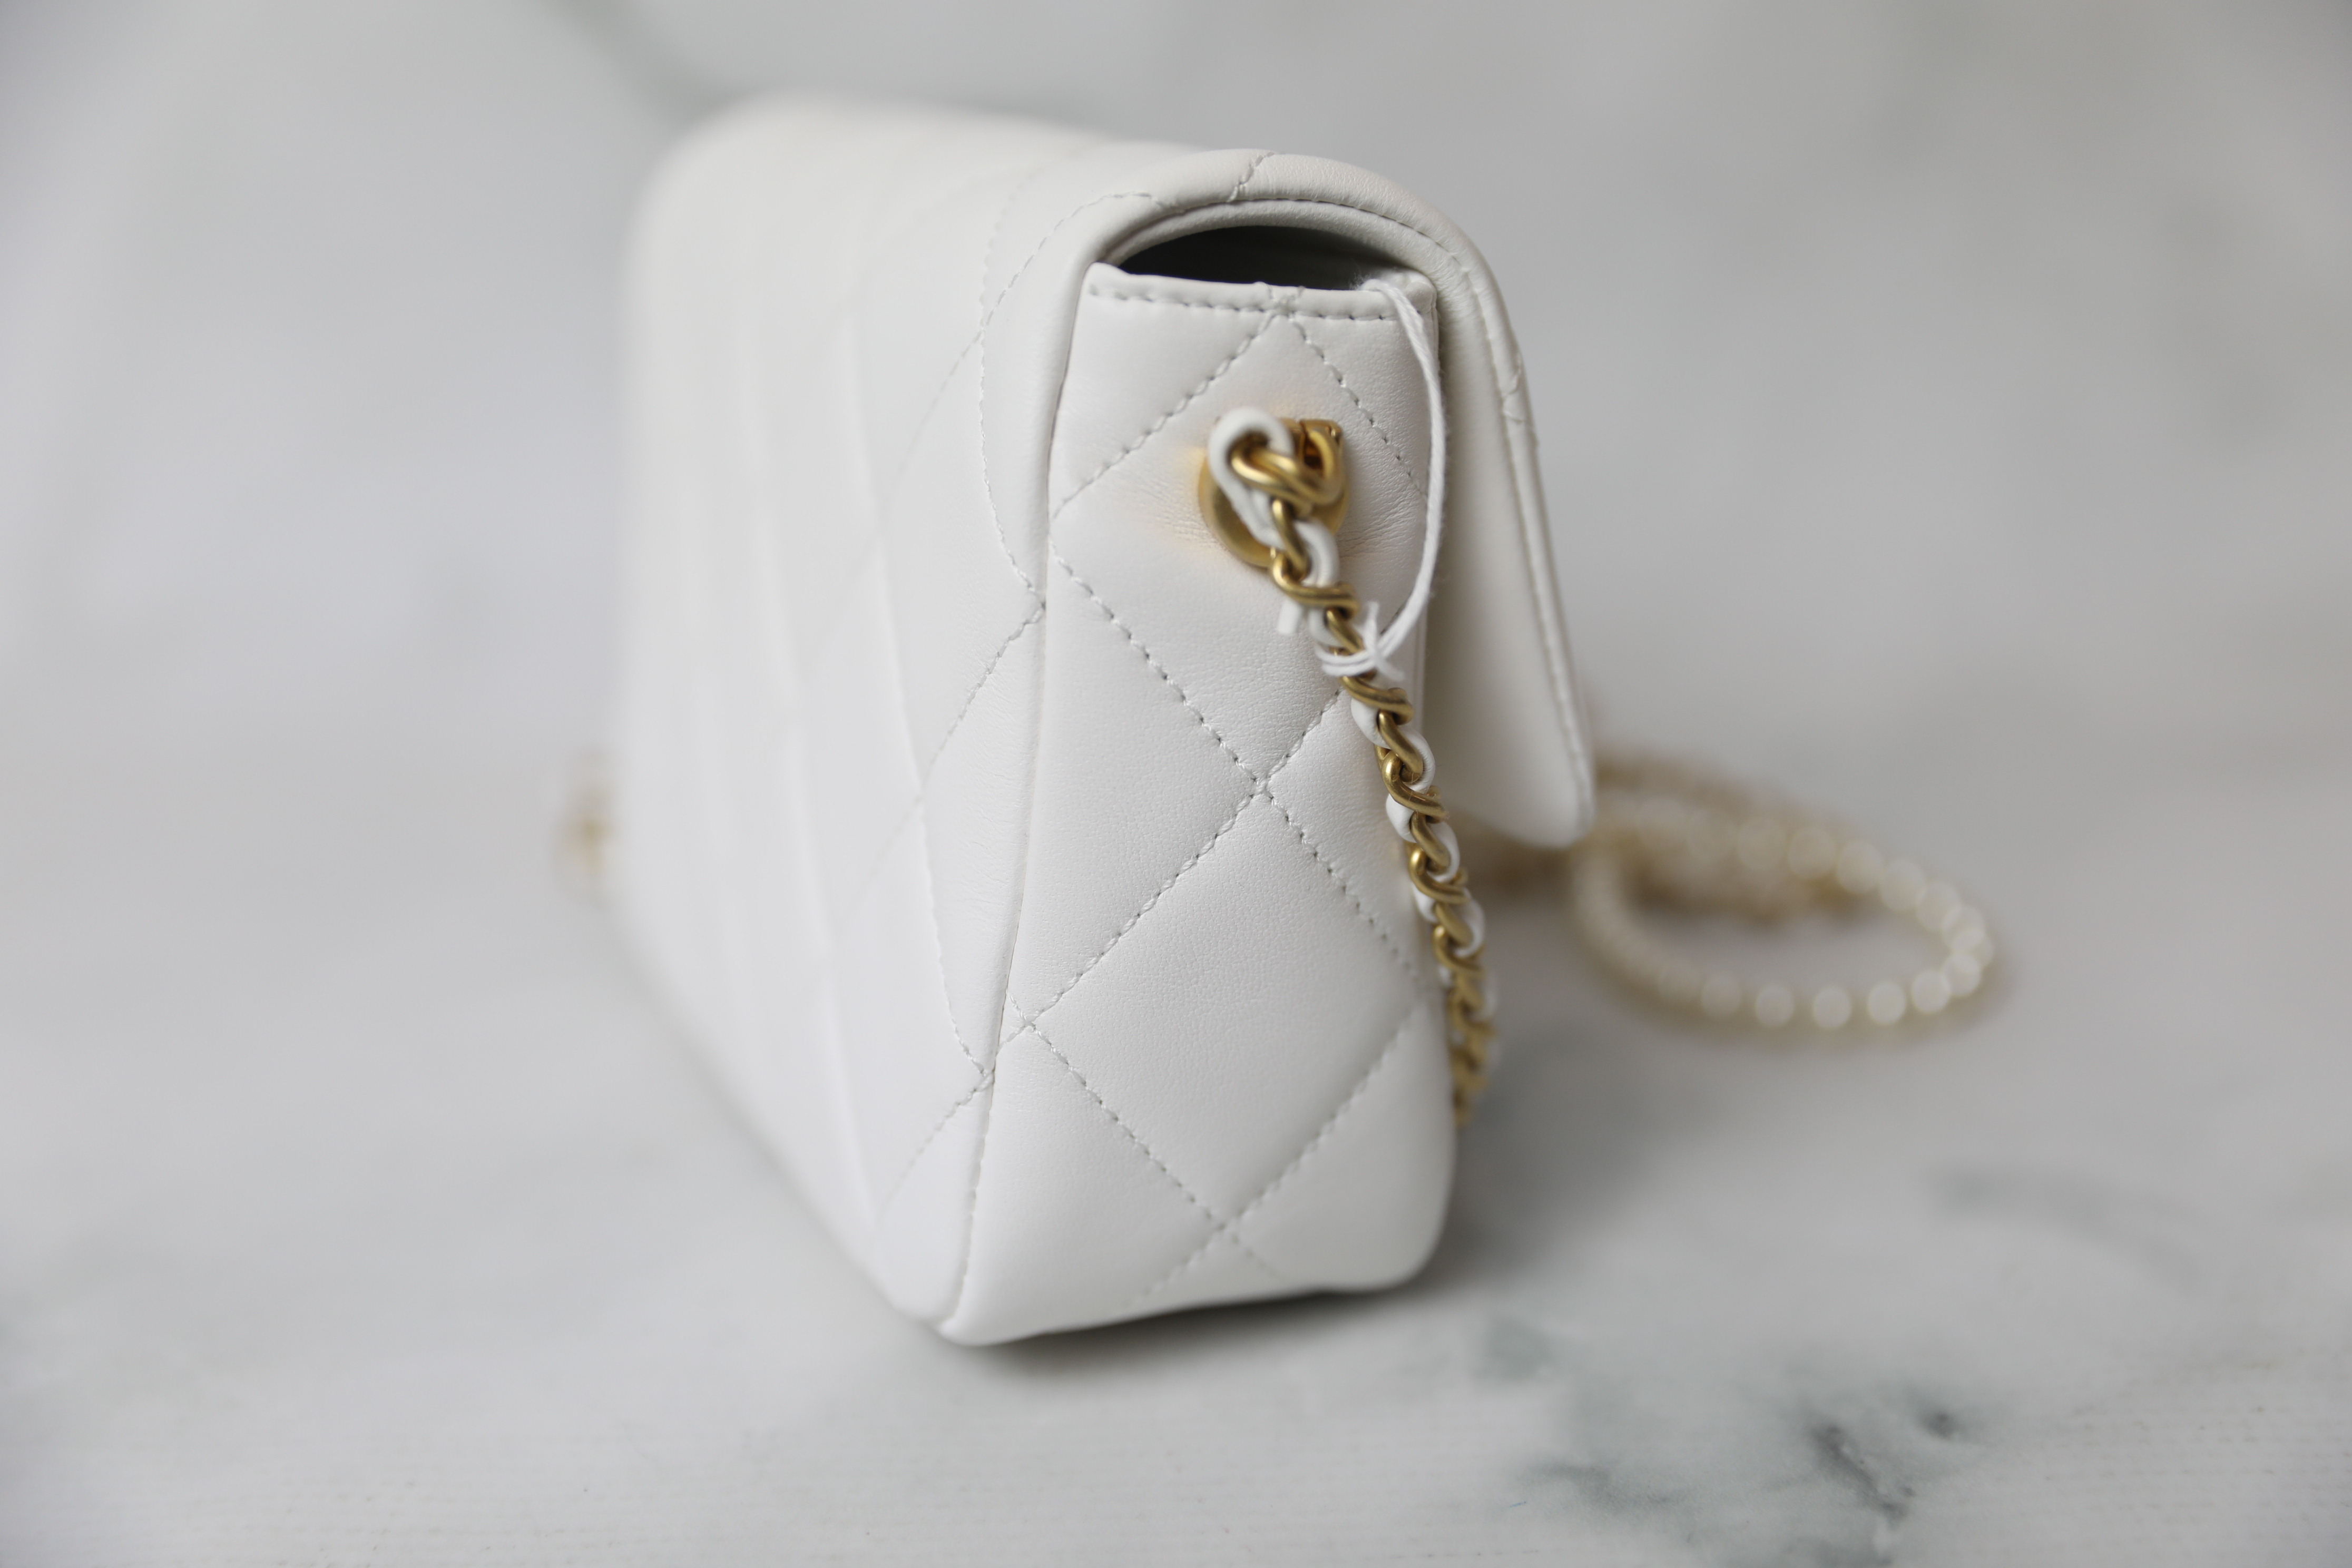 Chanel Seasonal Flap Bag, My Perfect Mini, White Lambskin Leather, Gold  Hardware, Pearl and Leather Strap, New in Box - Julia Rose Boston